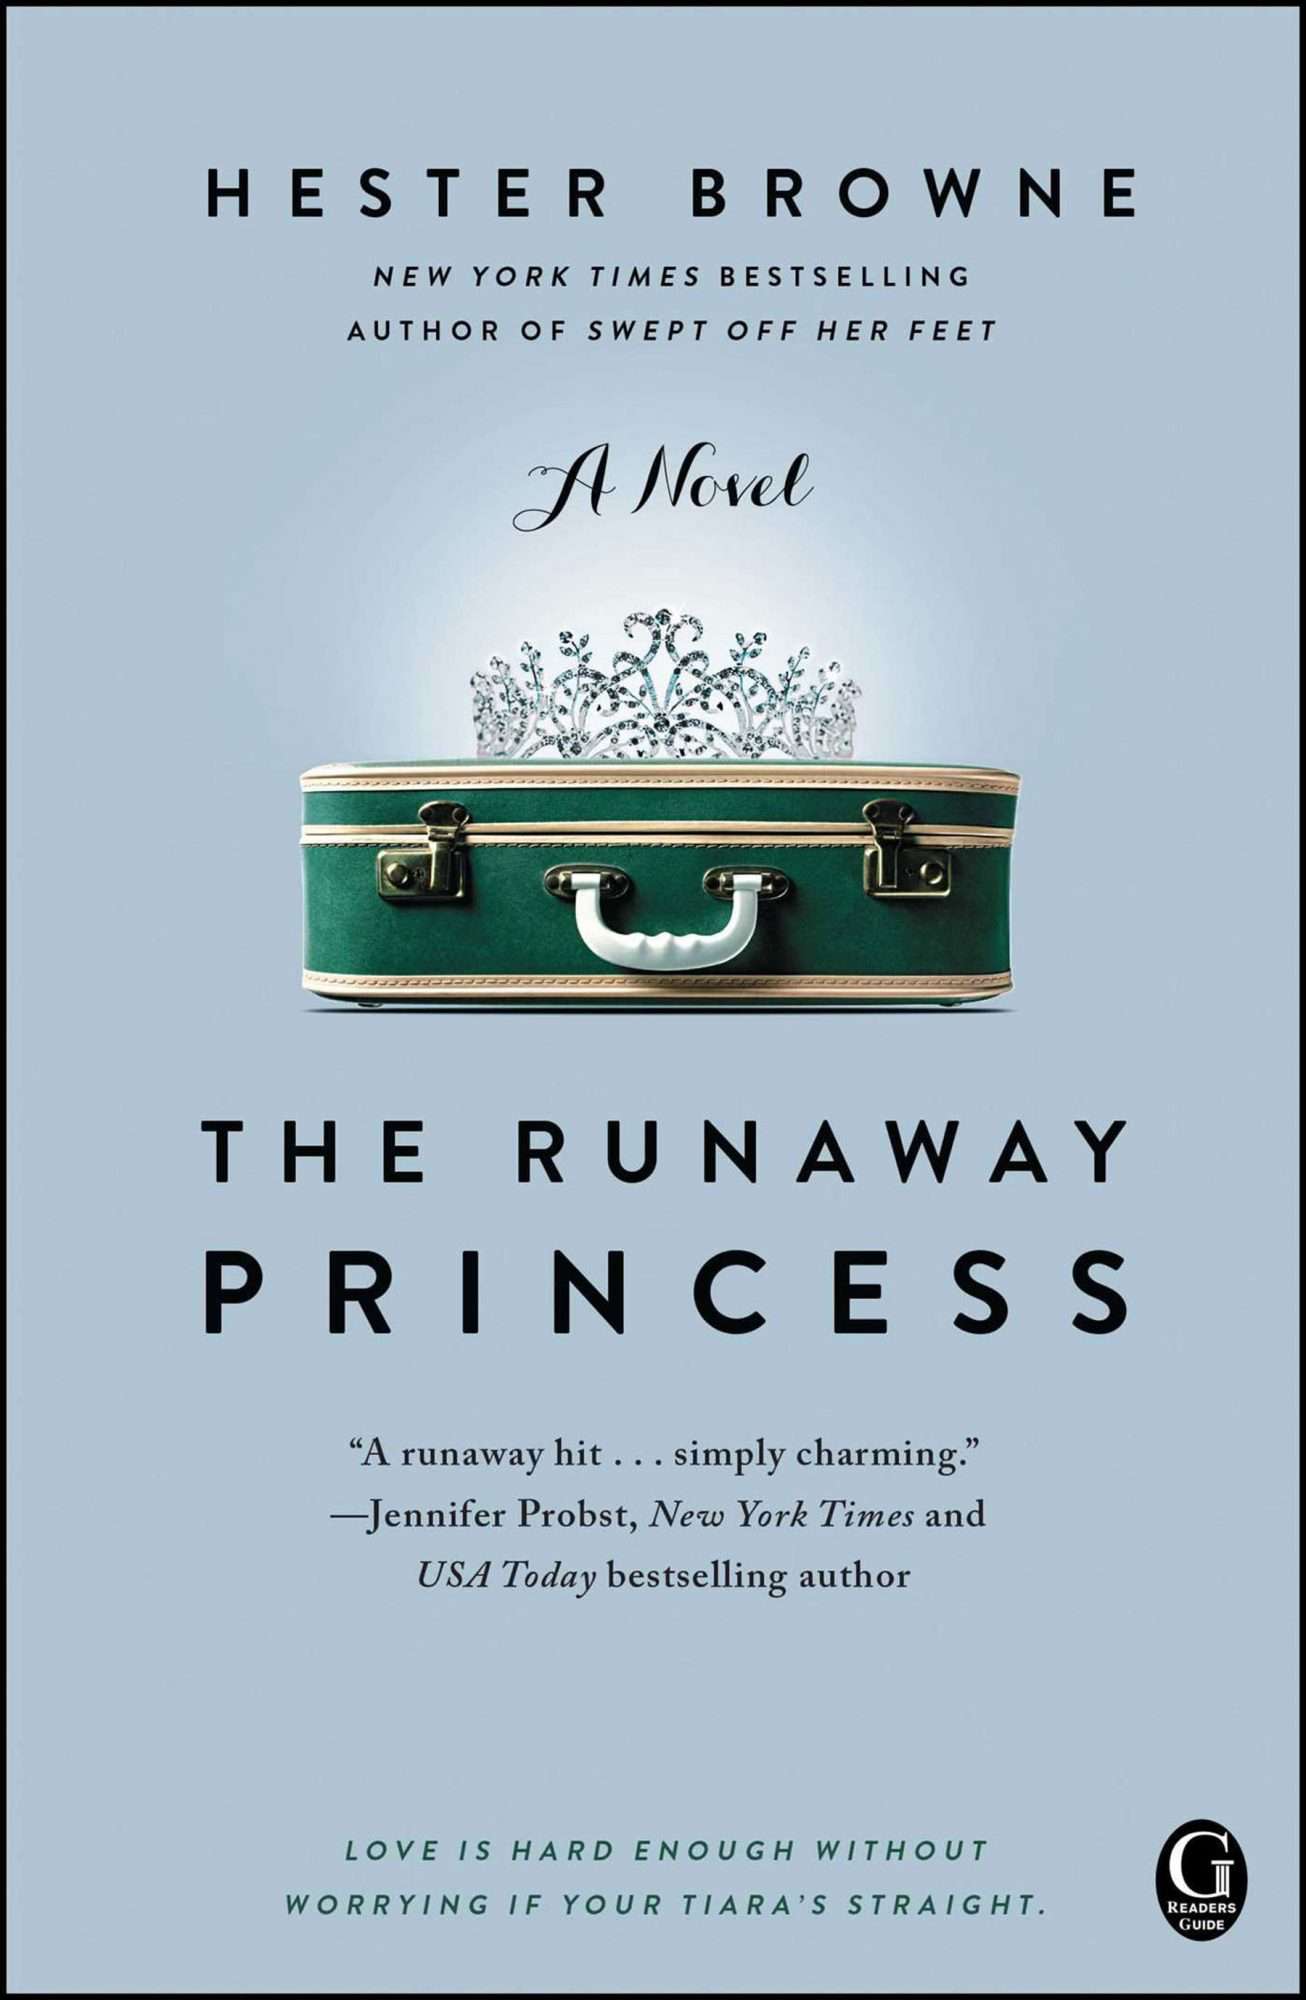 The Runaway Princess, by Hester Browne